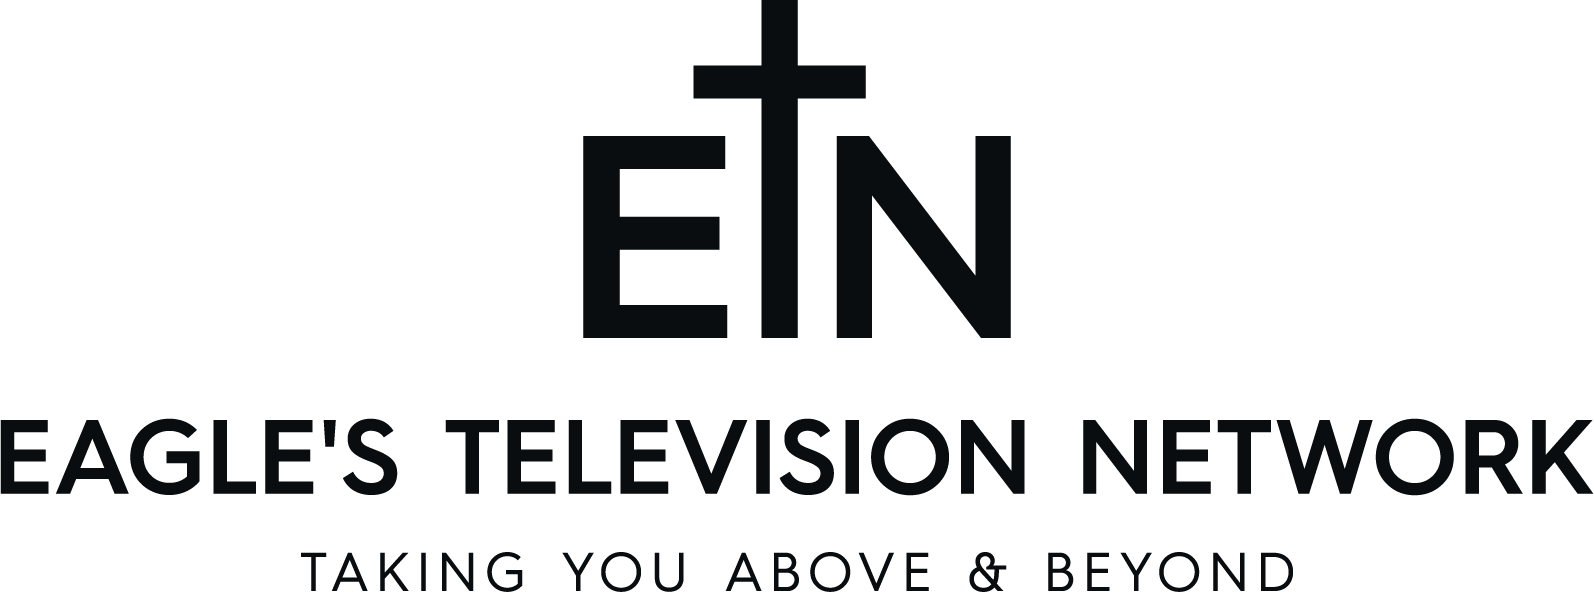 Eagles TV Network